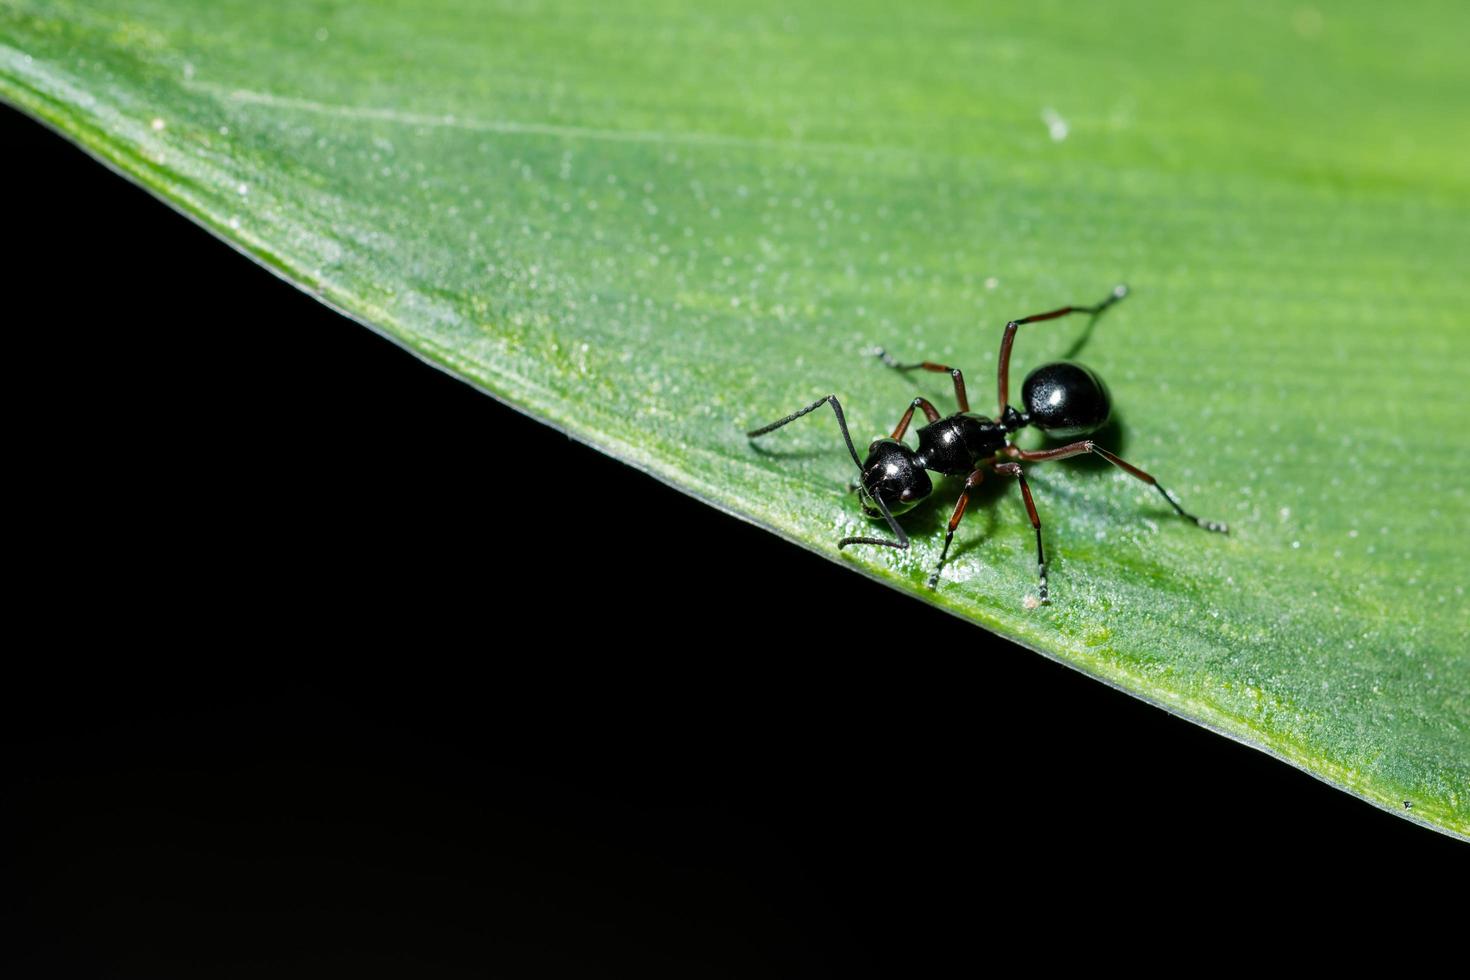 hormiga negra en una hoja foto